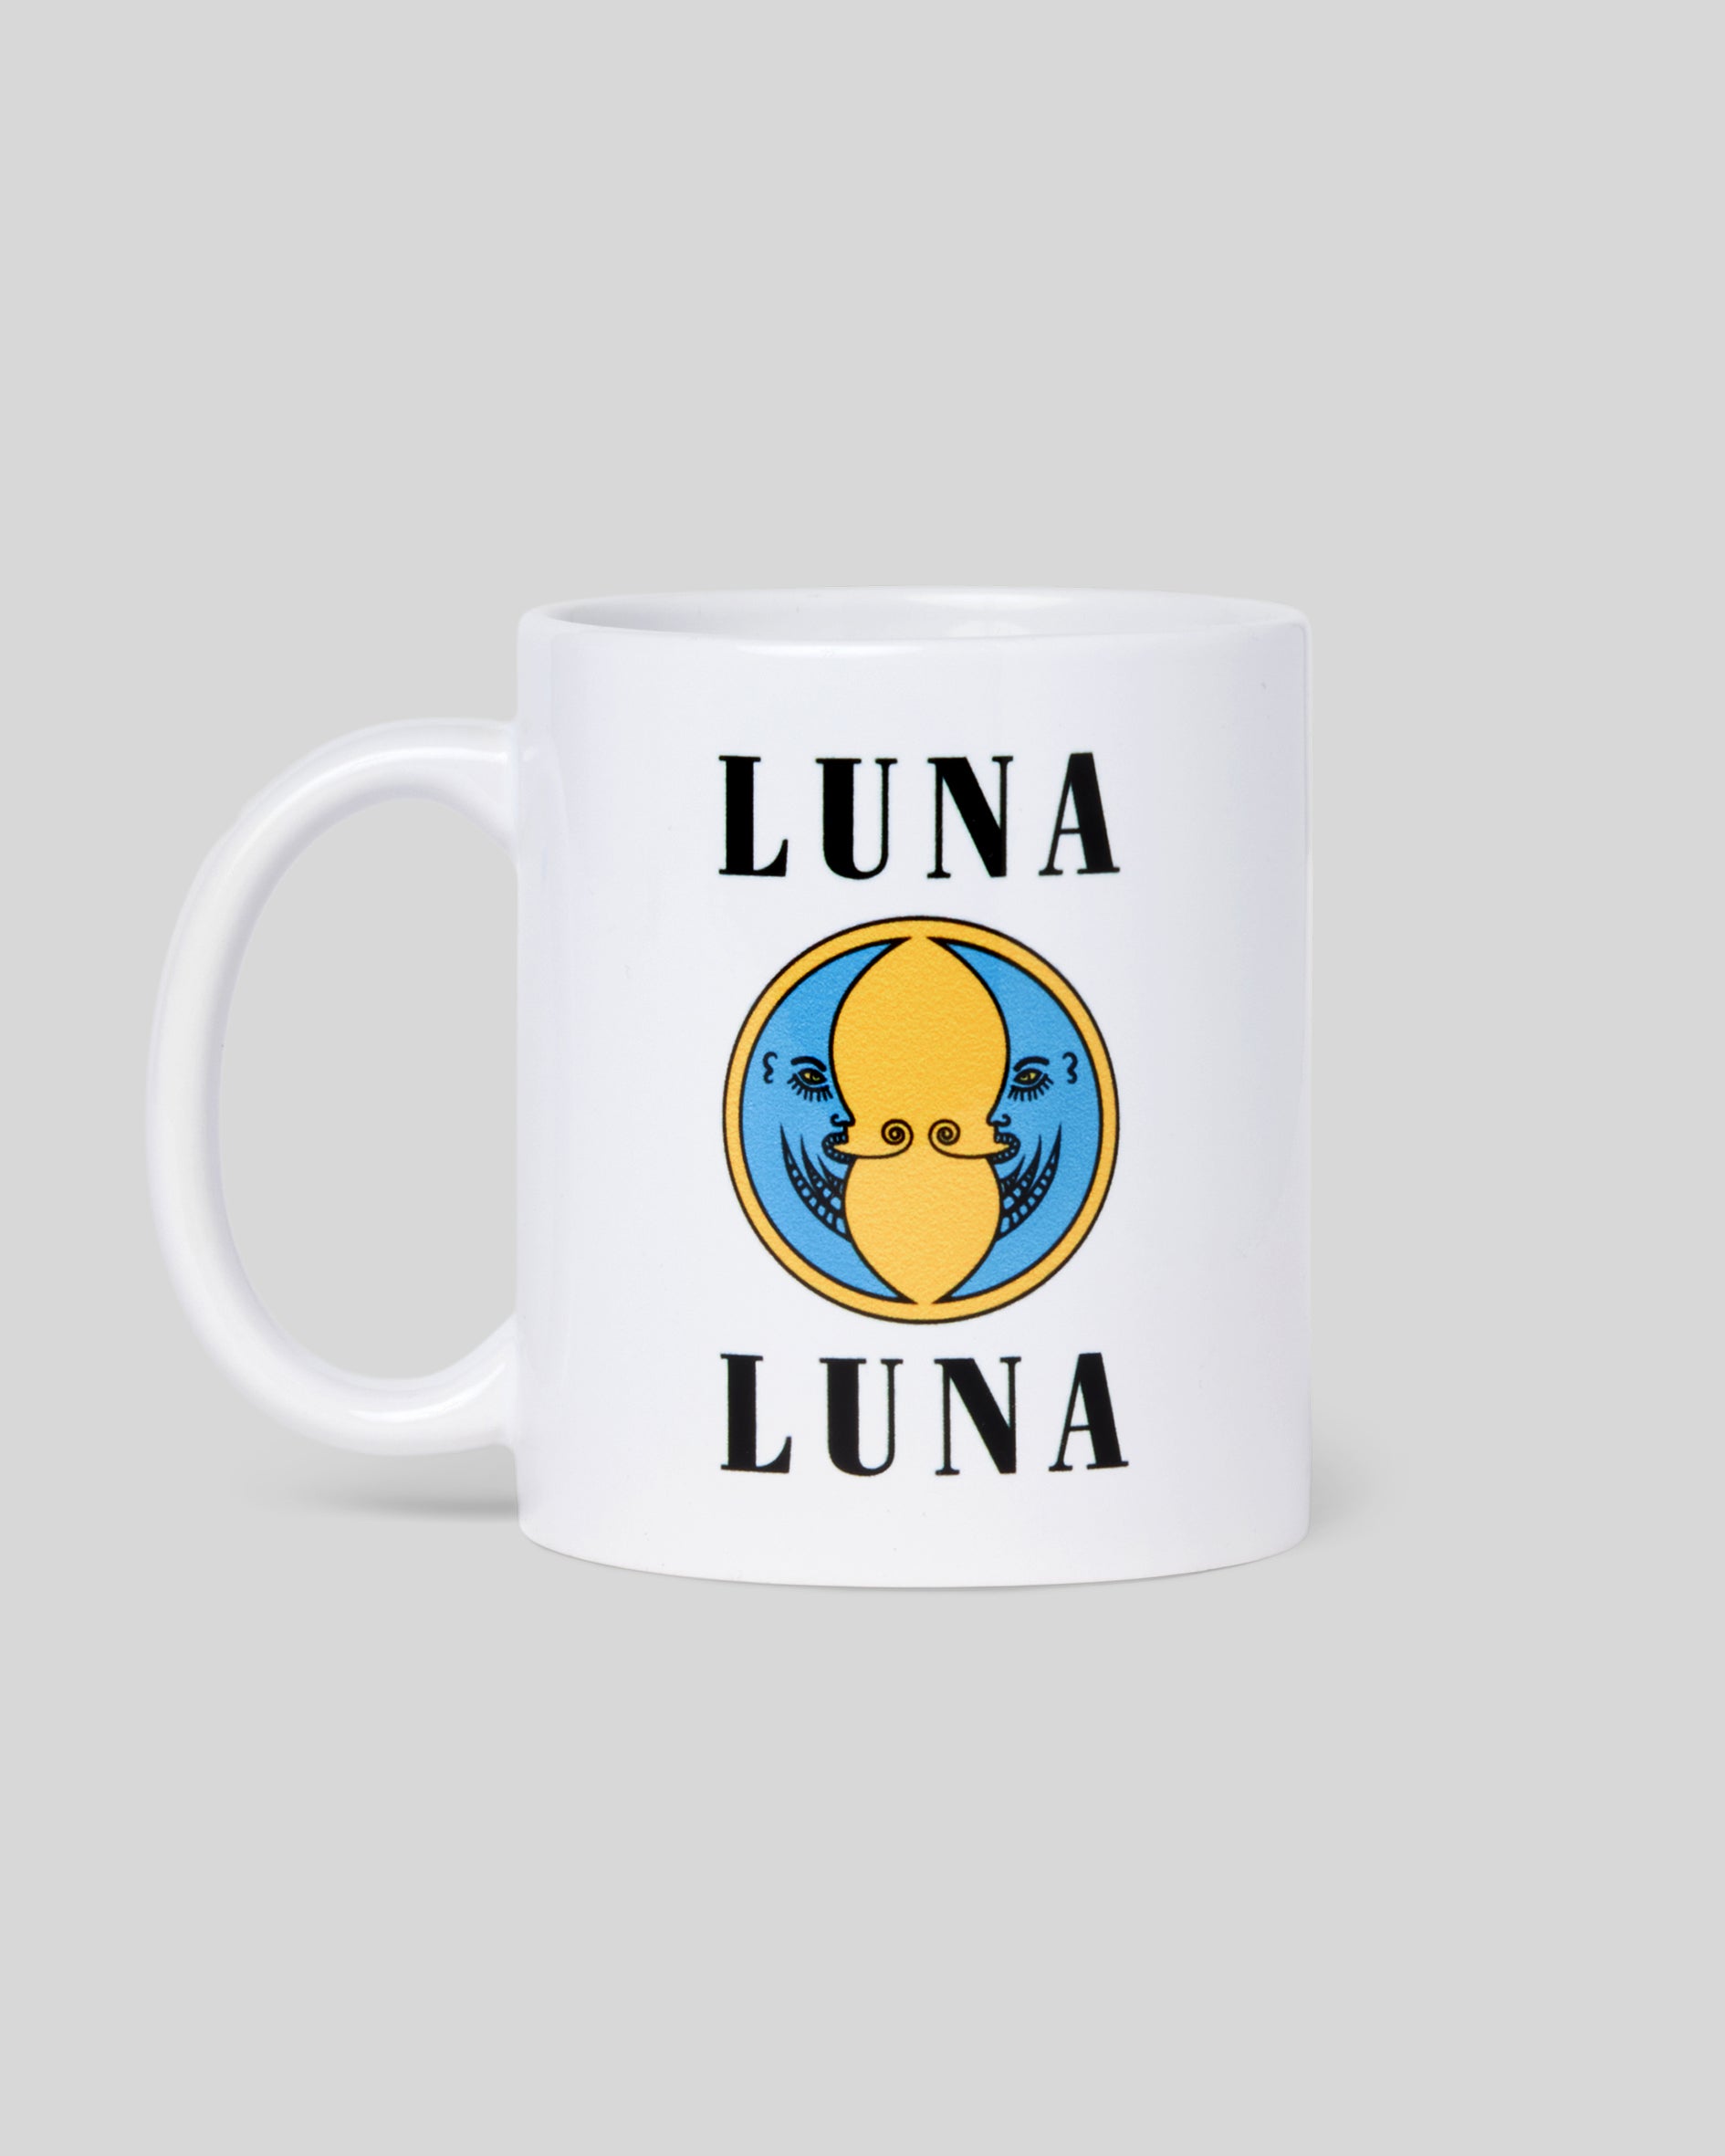 1987 Moon Diner Mug. White coffee mug with black "LUNA LUNA" logo and blue and yellow moon logo.